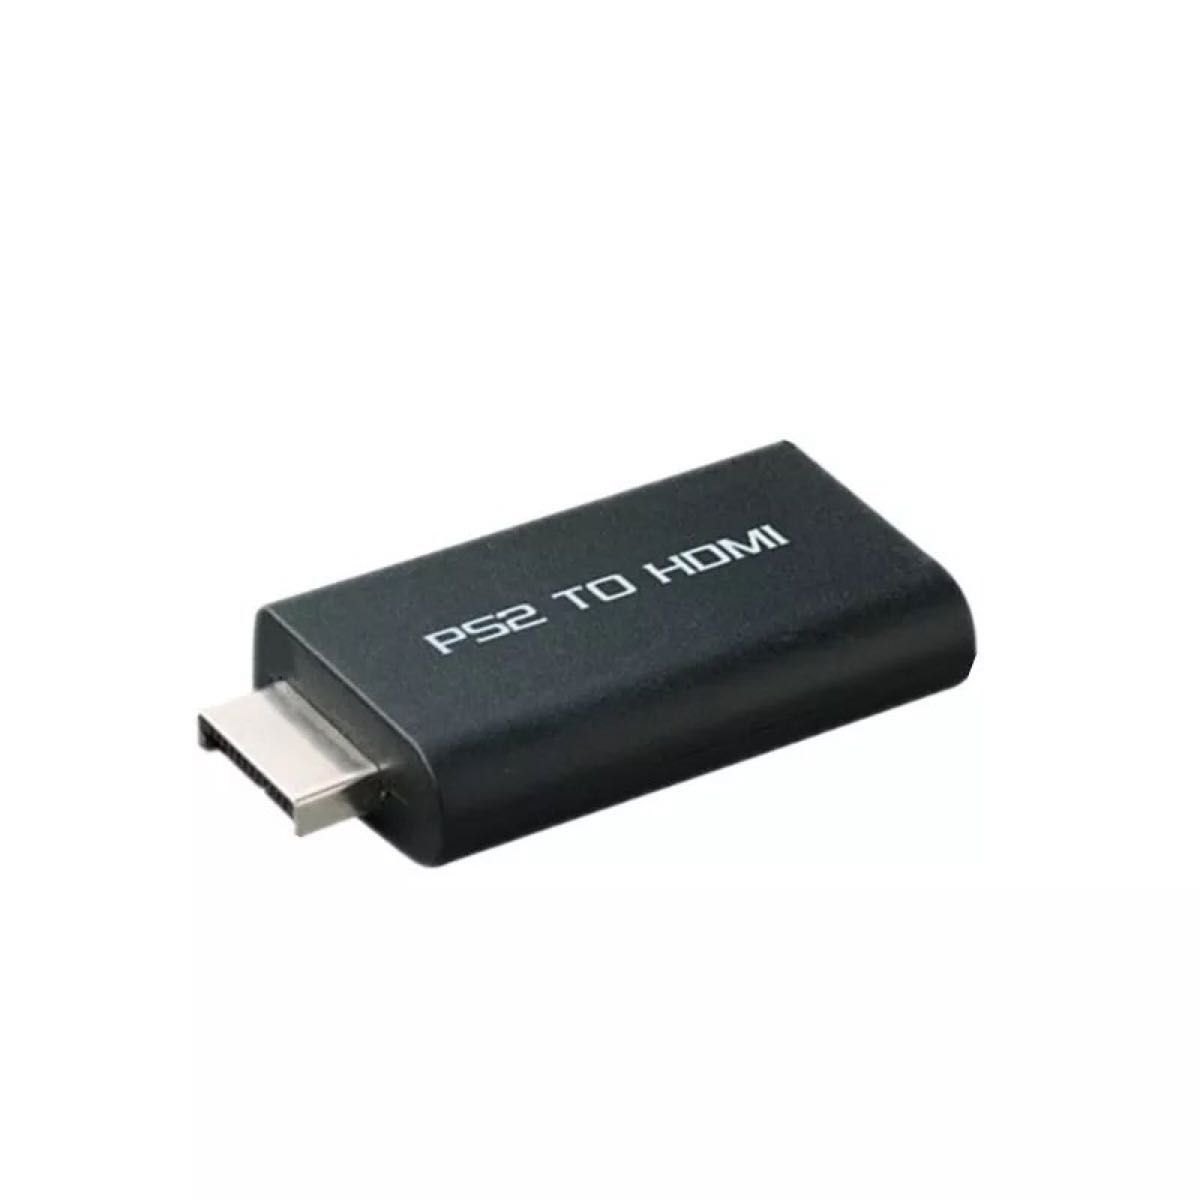 PS2 to HDMI 変換アダプター プレステ2 コンバーター